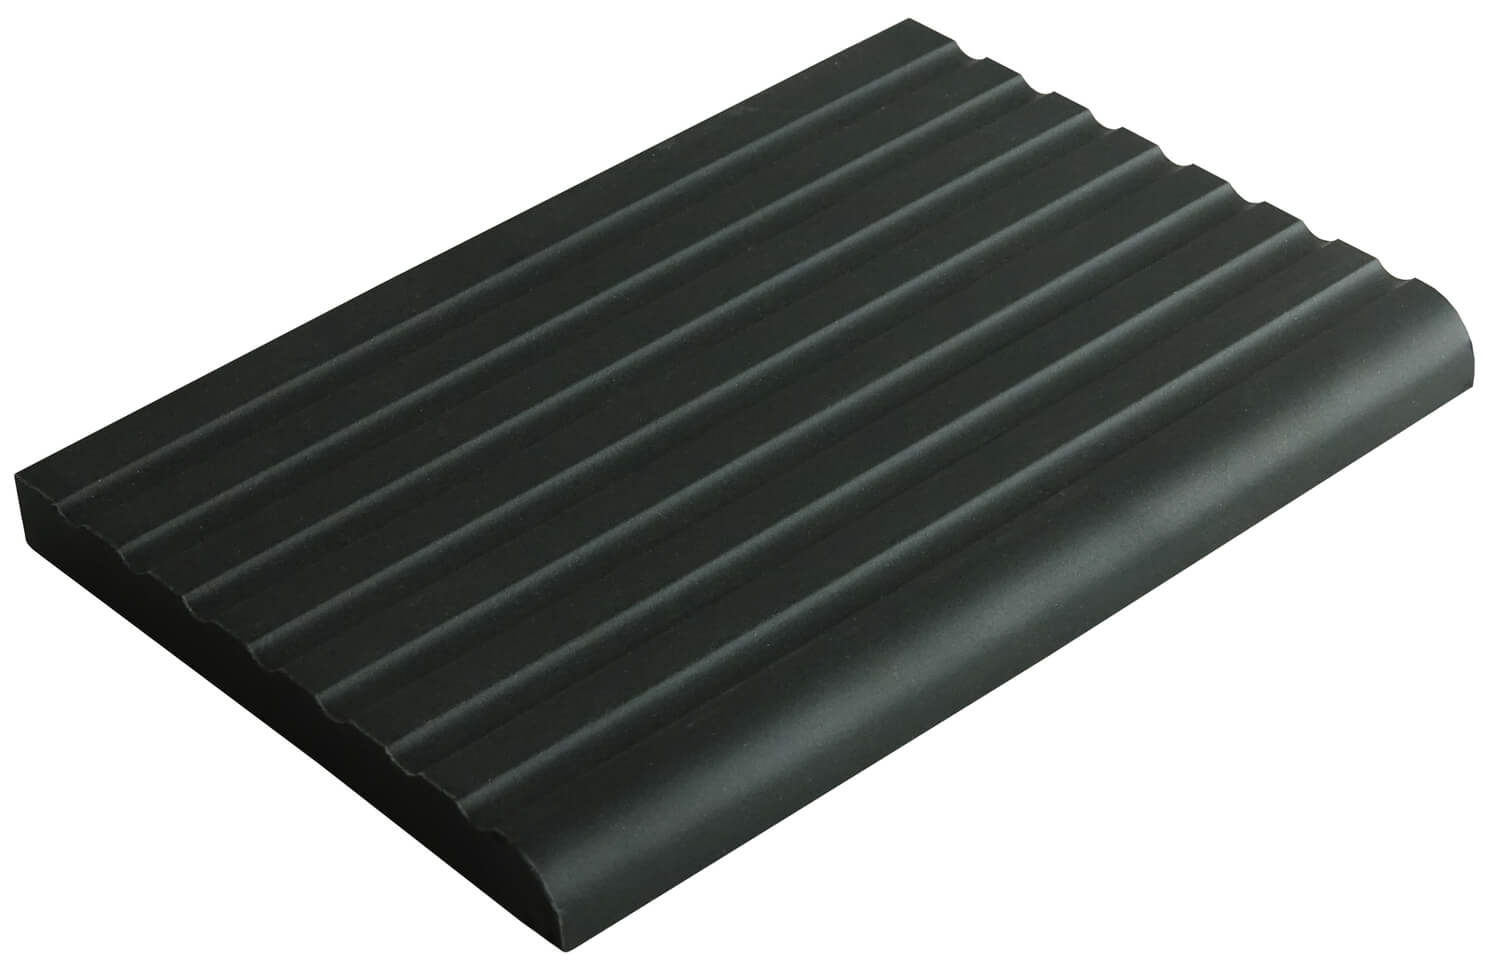 Dorset Woolliscroft Black Step Tread Slip Resistant Quarry Tile 148x100mm